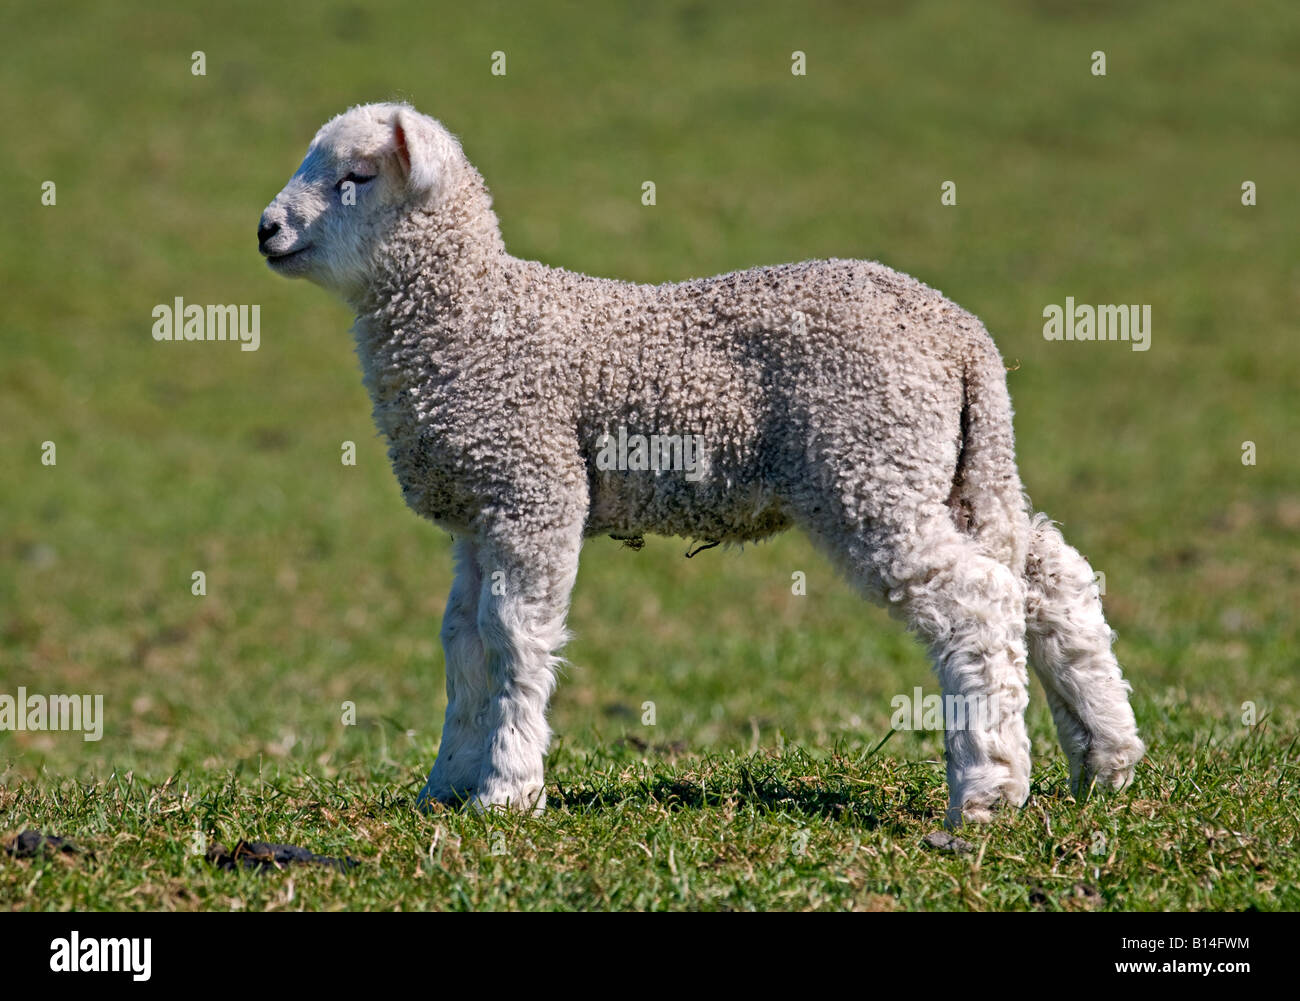 White Lamb, Dorset, England Stock Photo